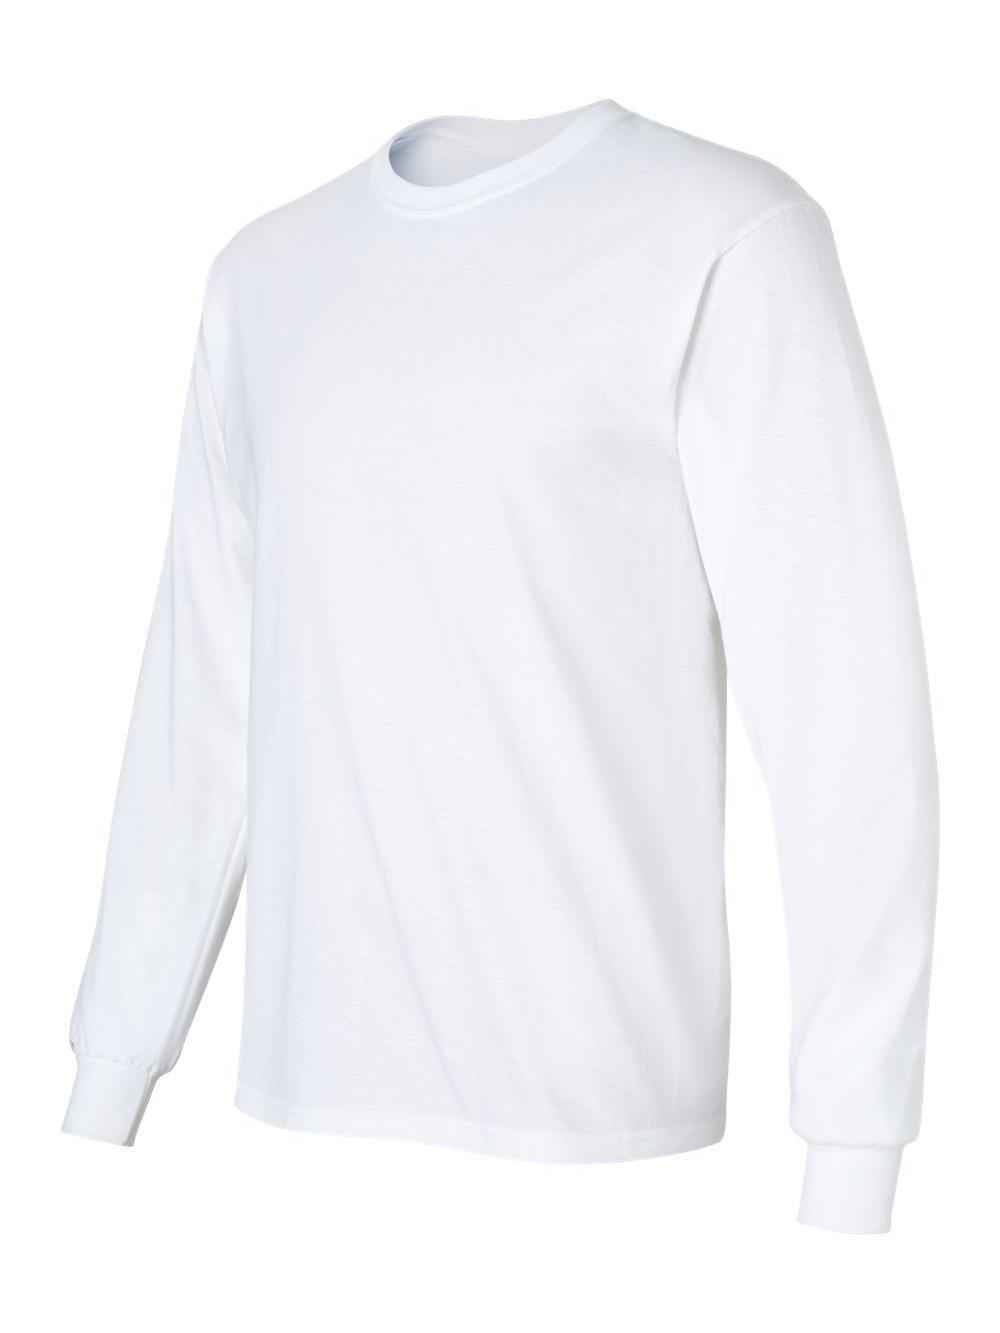 Gildan - Ultra Cotton Long Sleeve T-Shirt - 2400 - White - Size